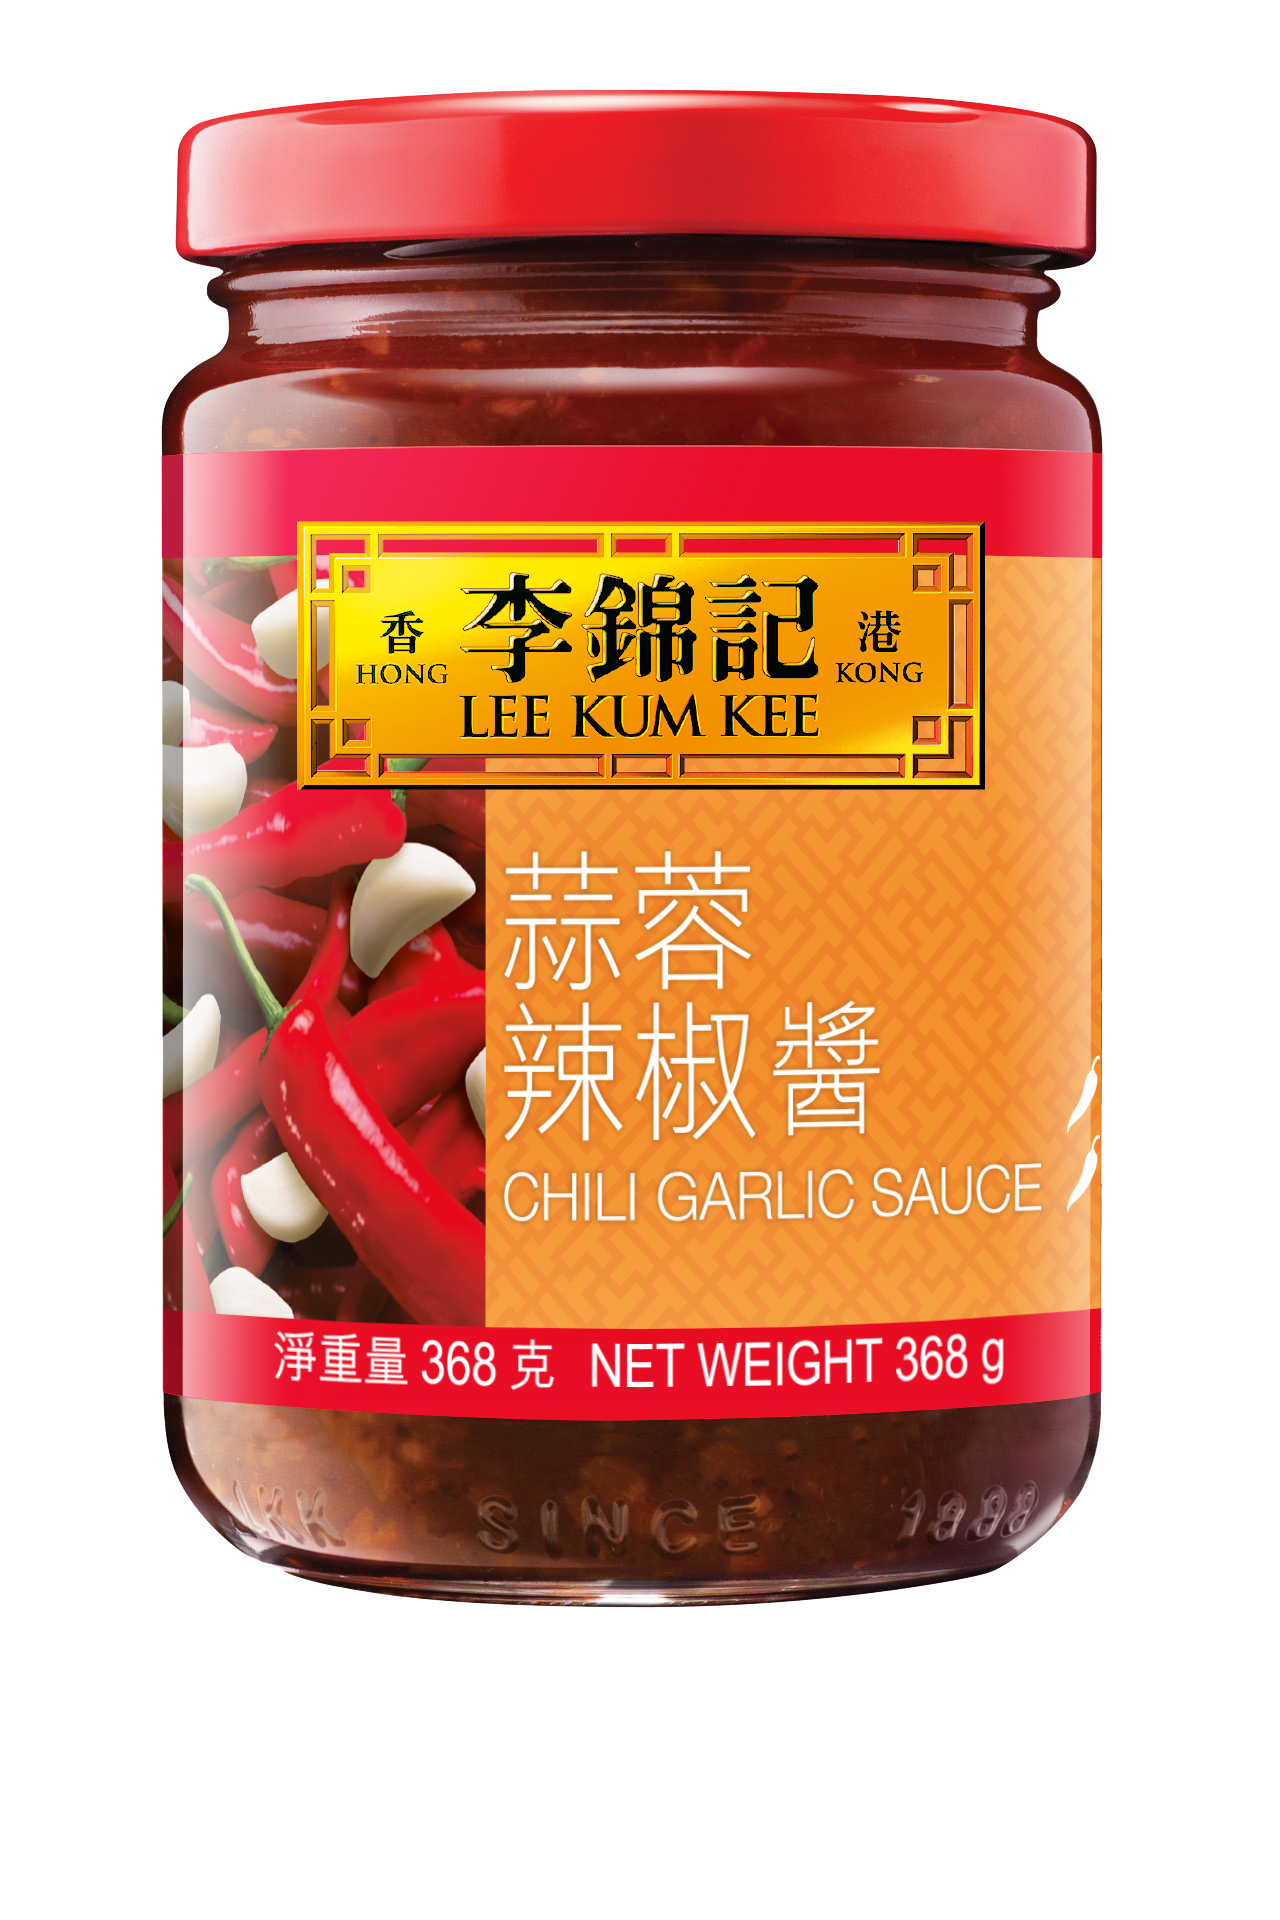 李锦记蒜蓉豆豉酱2.27kgLKK’s Black Bean Garlic Sauce – Five continents international